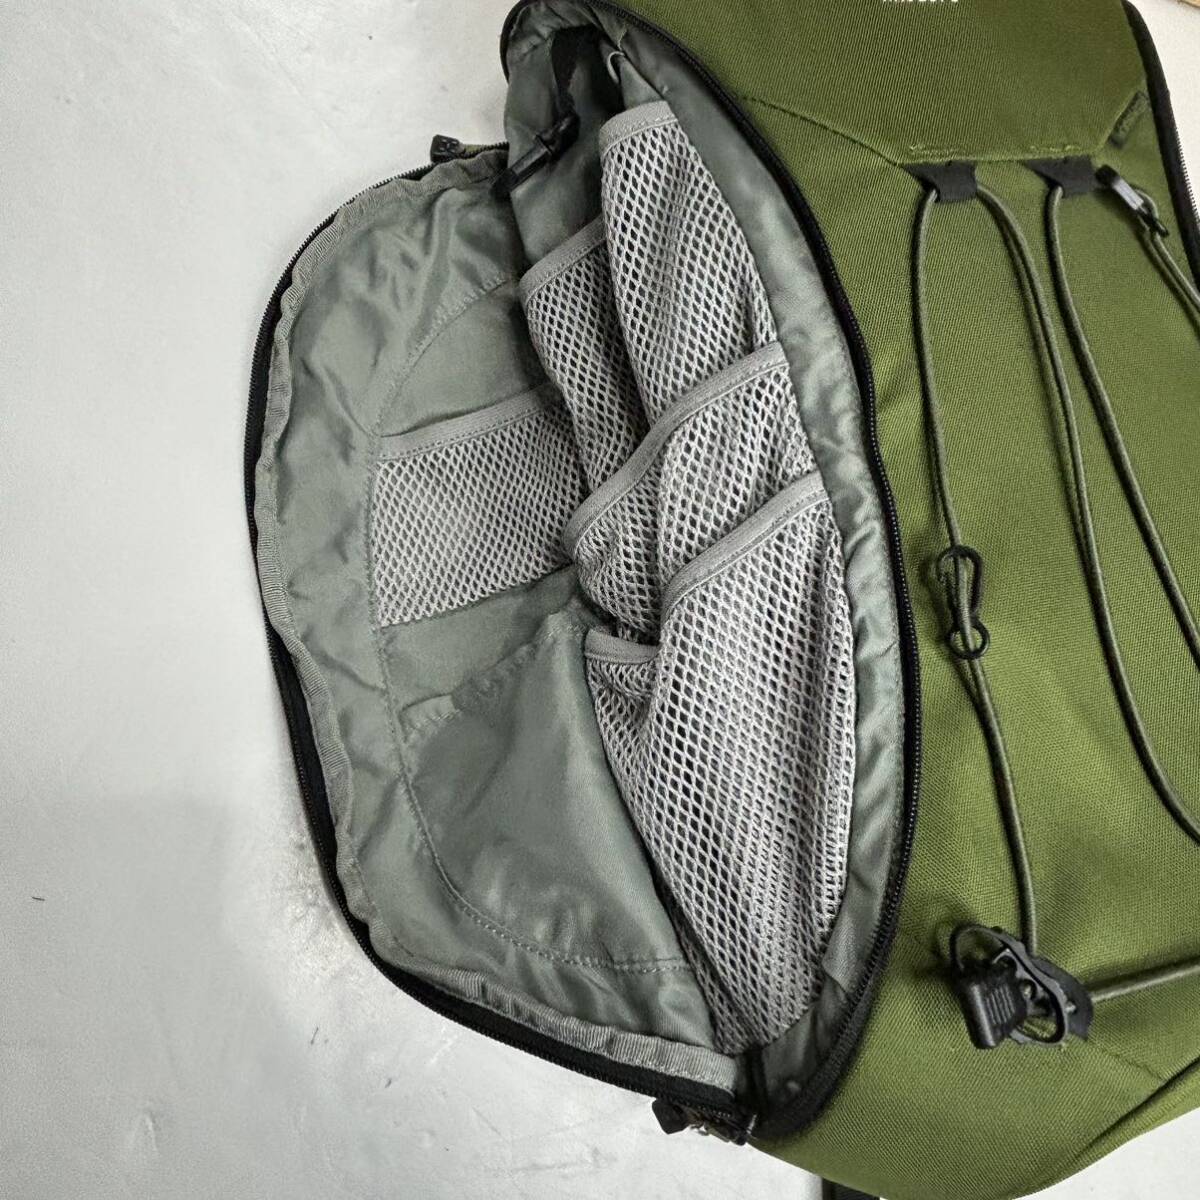 HAGLOFS Haglofs rucksack rucksack Day Pack backpack green man and woman use bag bag outdoor 